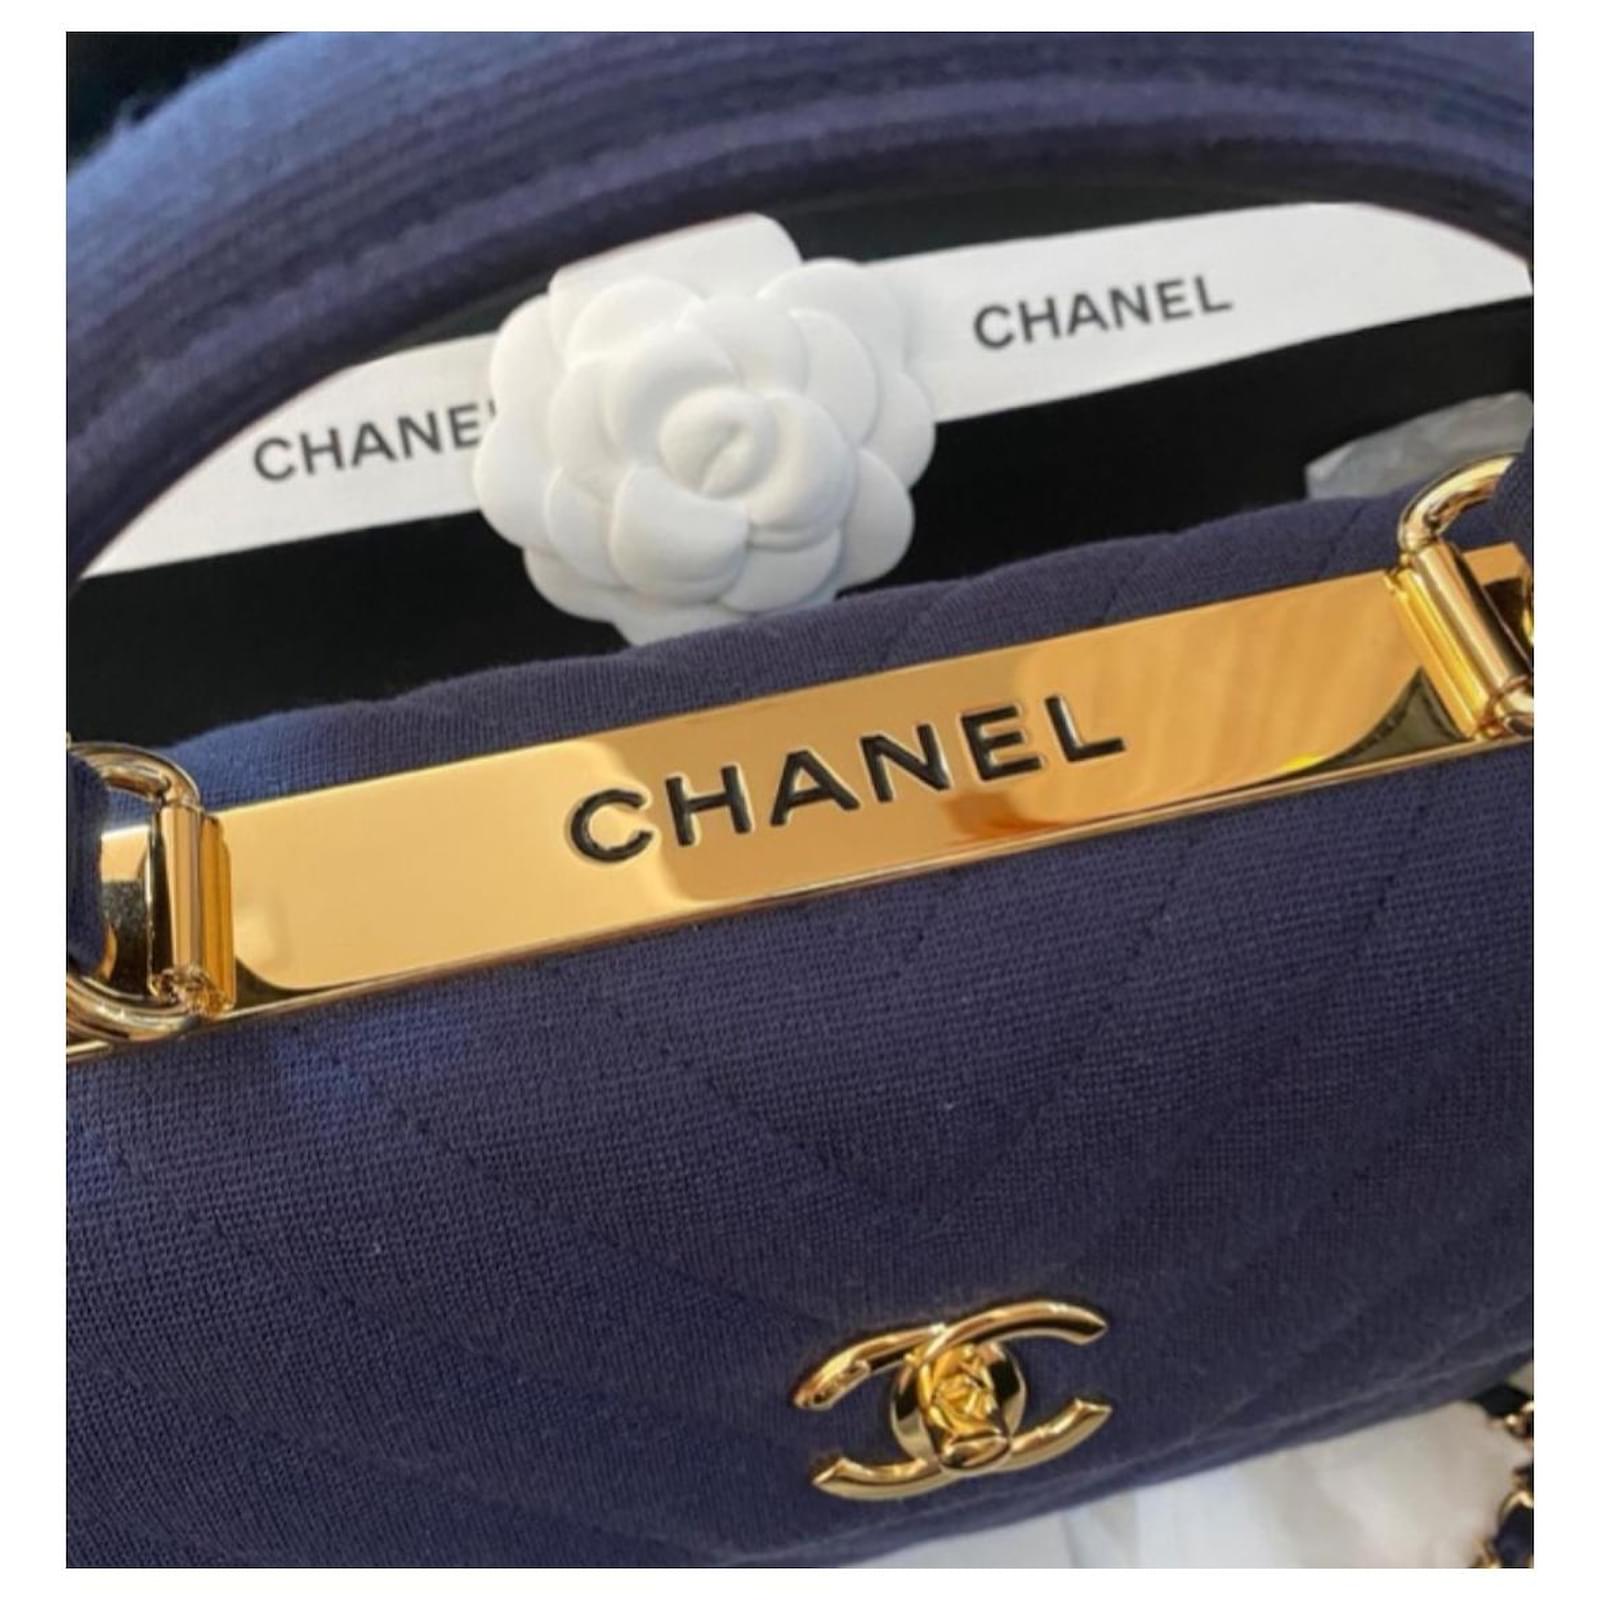 🎂🎁 BIRTHDAY GIFT UNBOXING: Cartier, Chanel Beauty, Jo Malone, Mejuri,  Nike, etc.